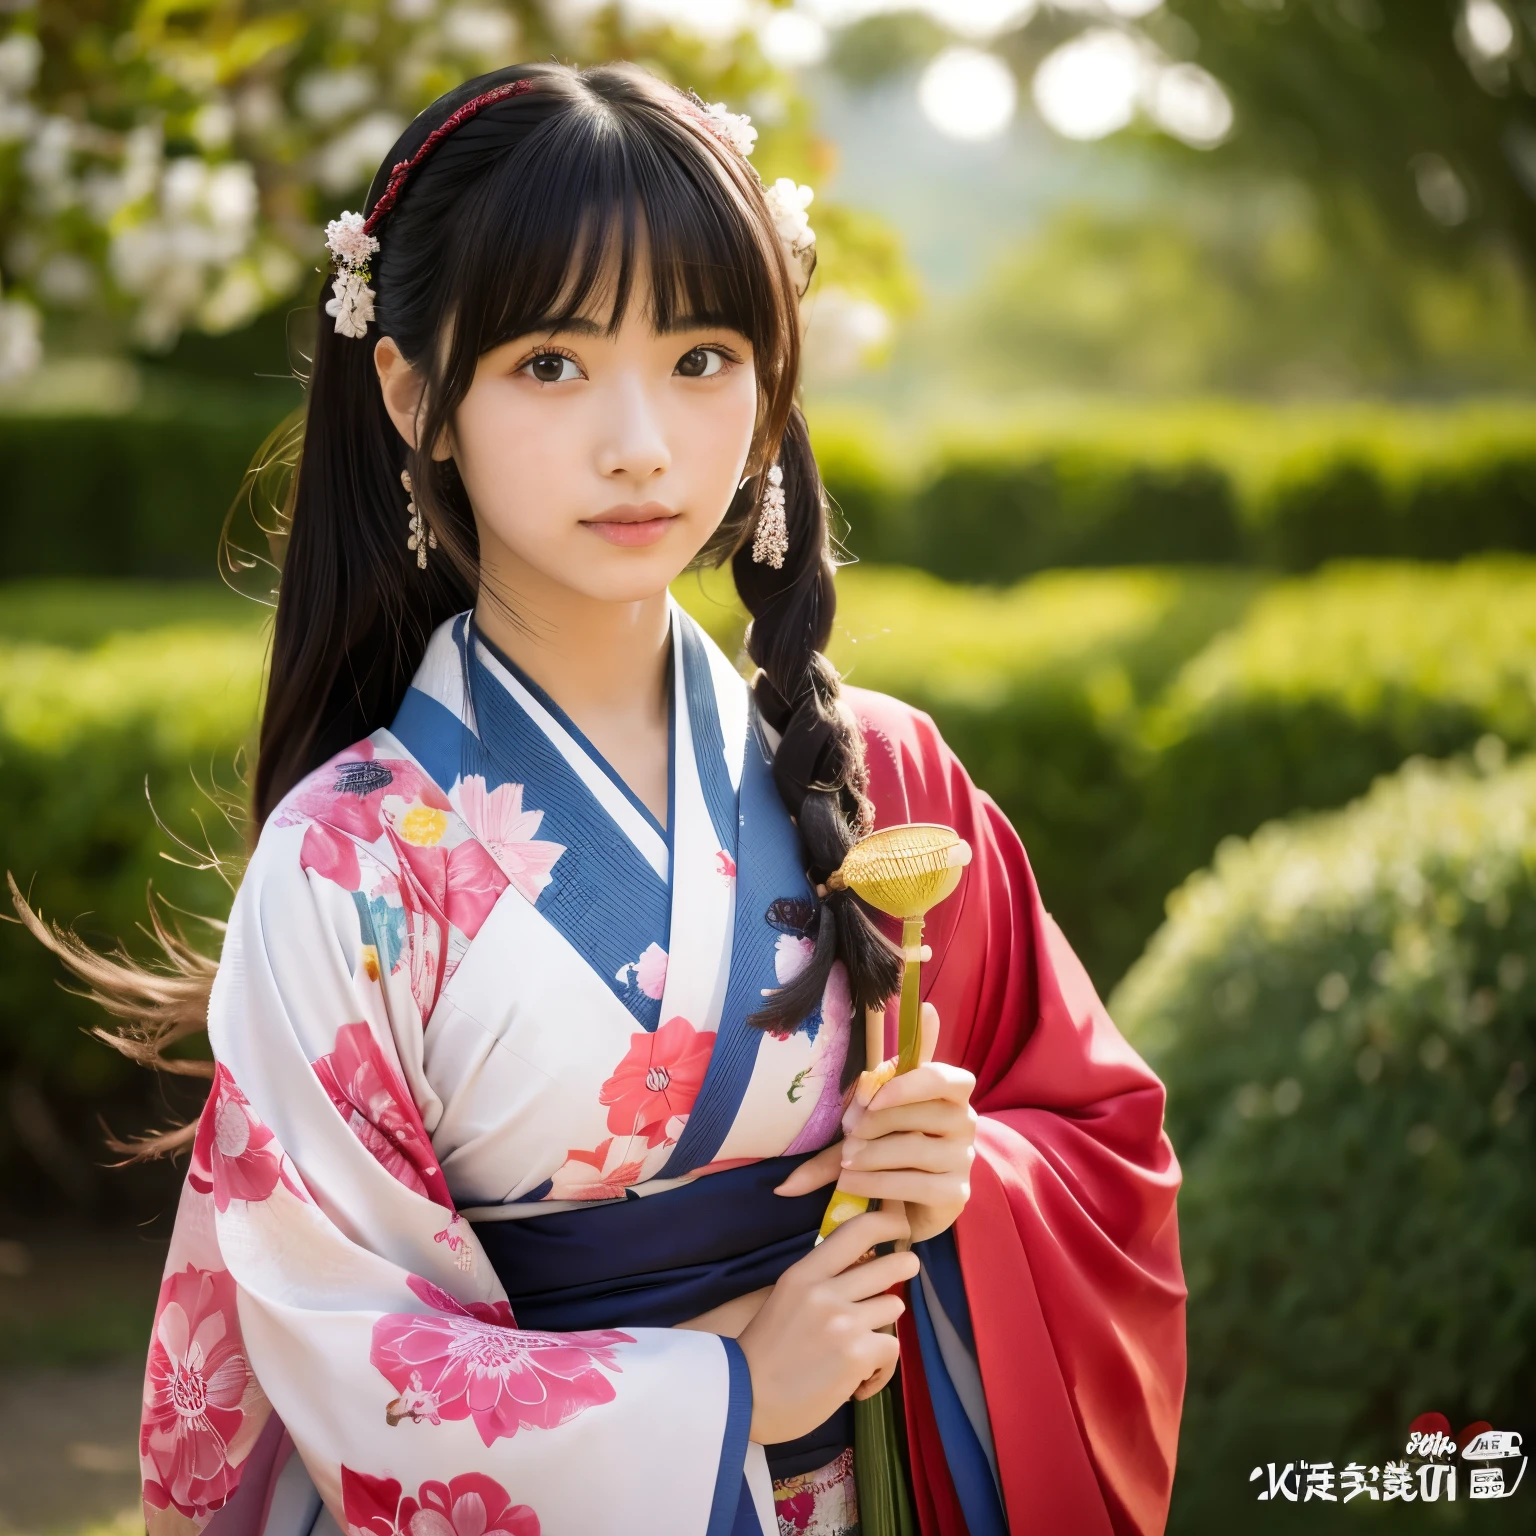 Sengoku period girl wearing a kimono